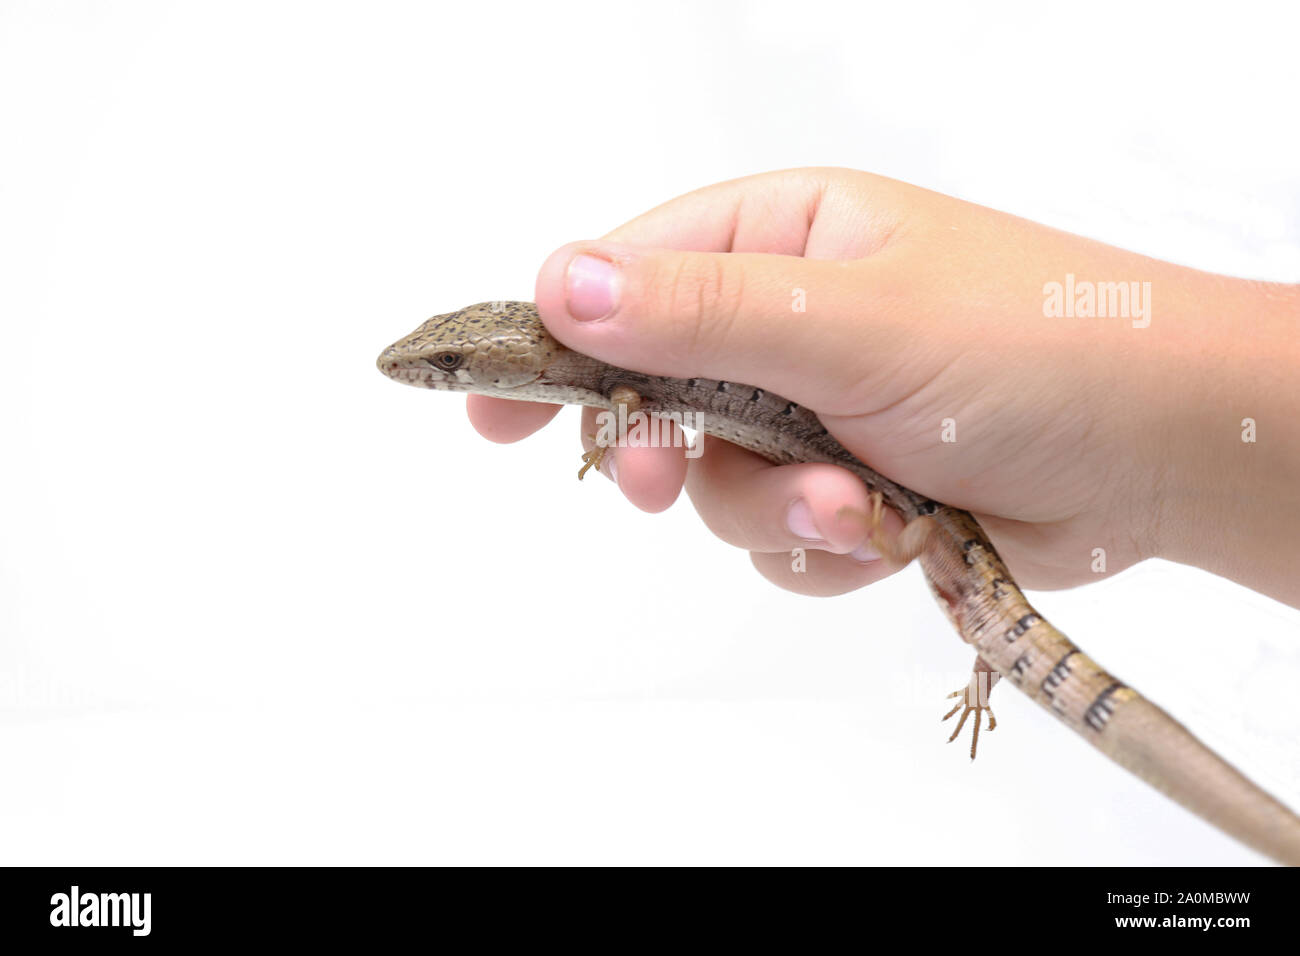 Madrean Alligator Lizard (Elgaria Kingii) Stockfoto